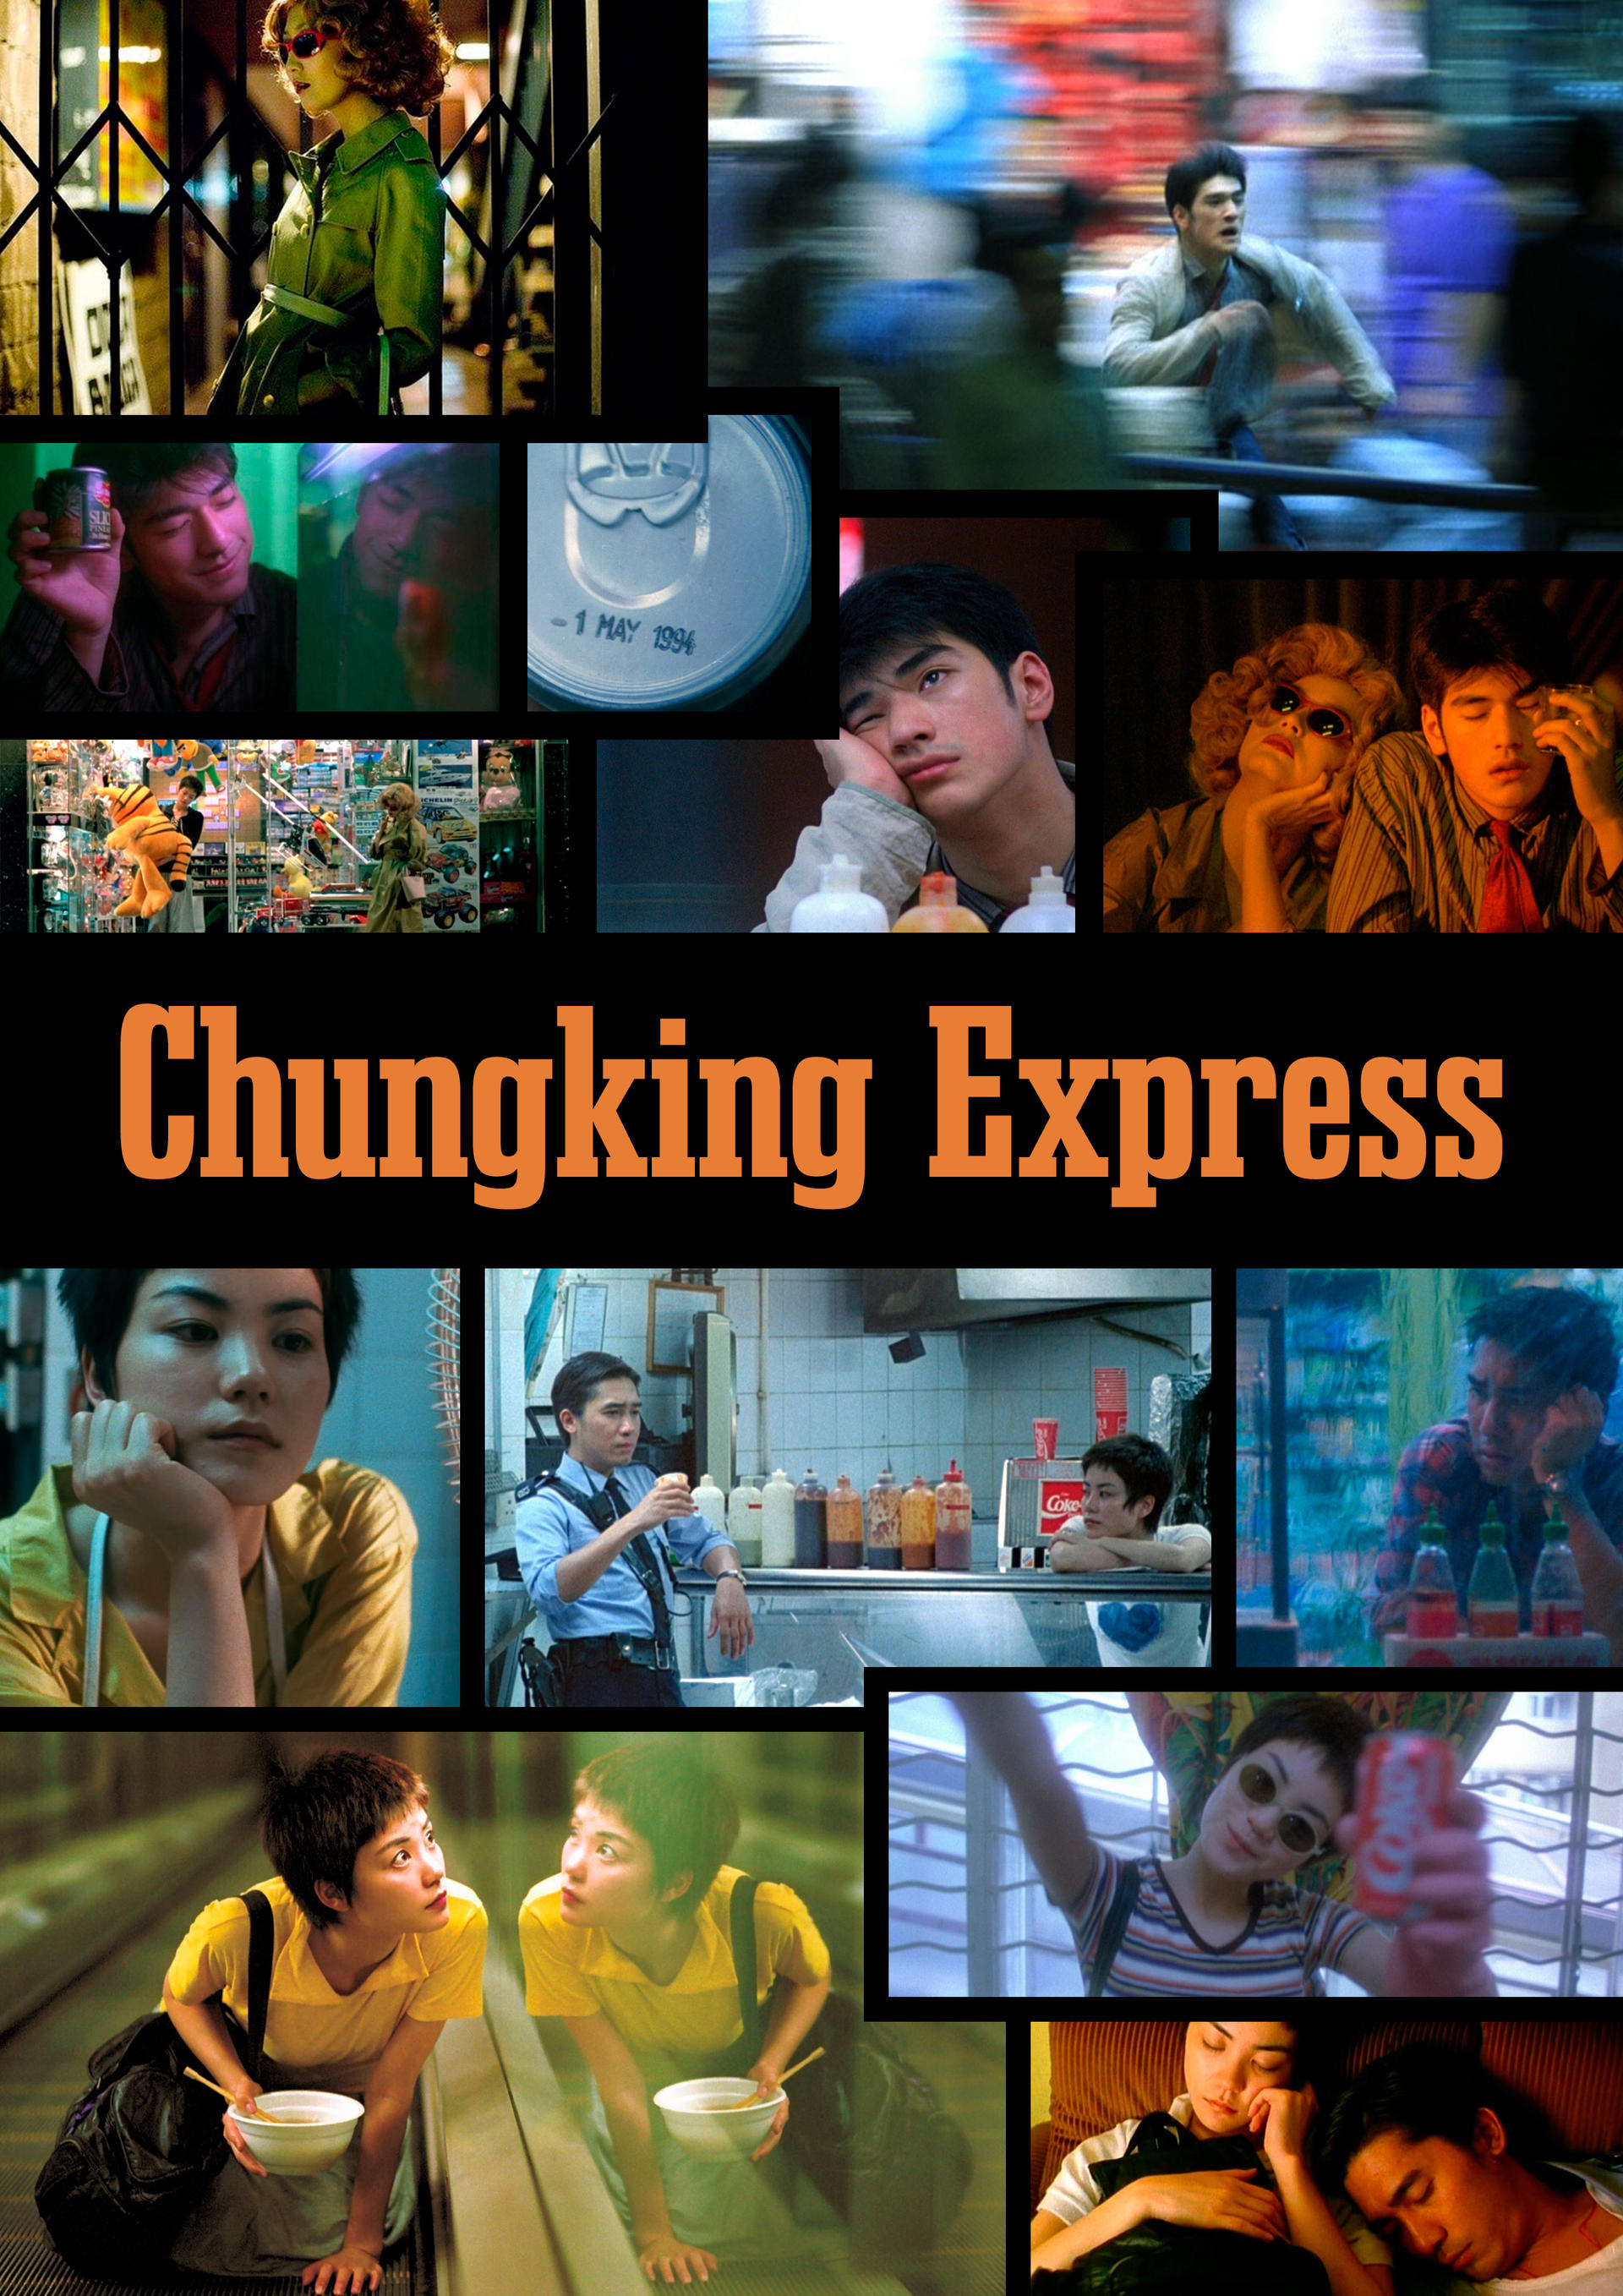 Chungking Express (Movie Poster) by SebLakes31 on DeviantArt